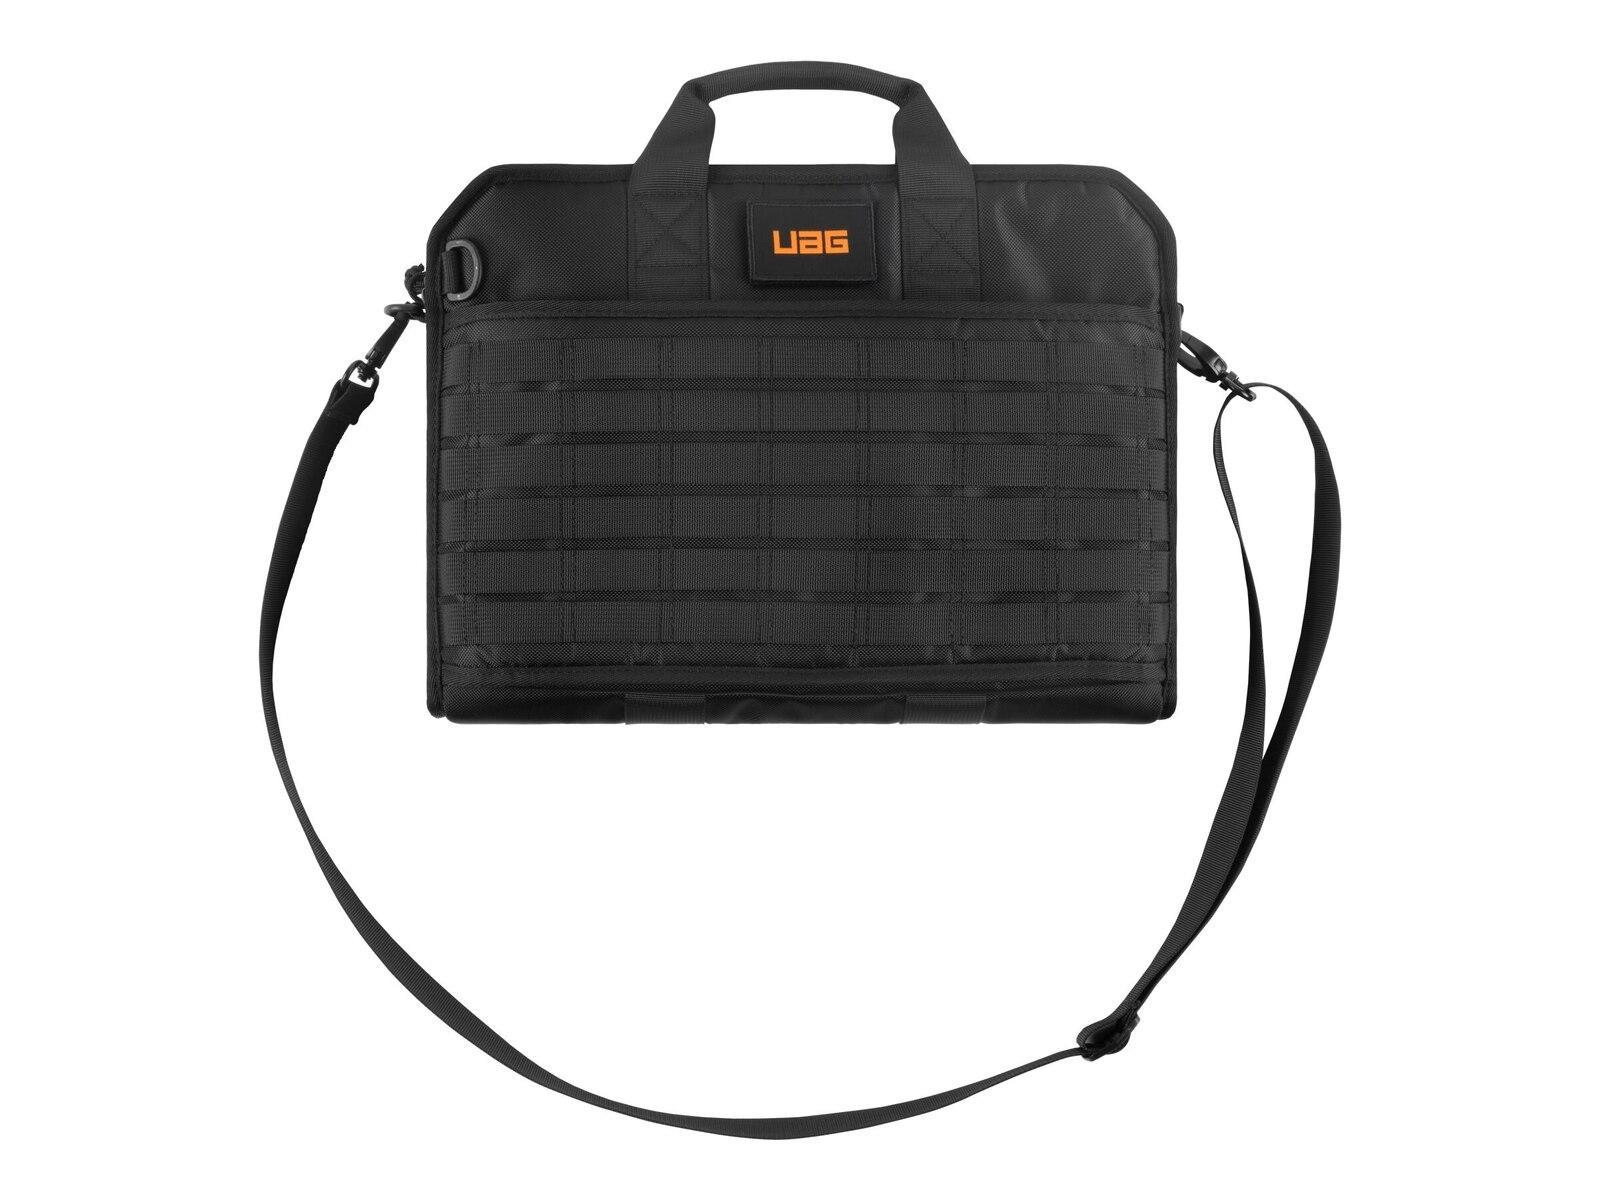 UAG Laptop Bag Std Issue Black